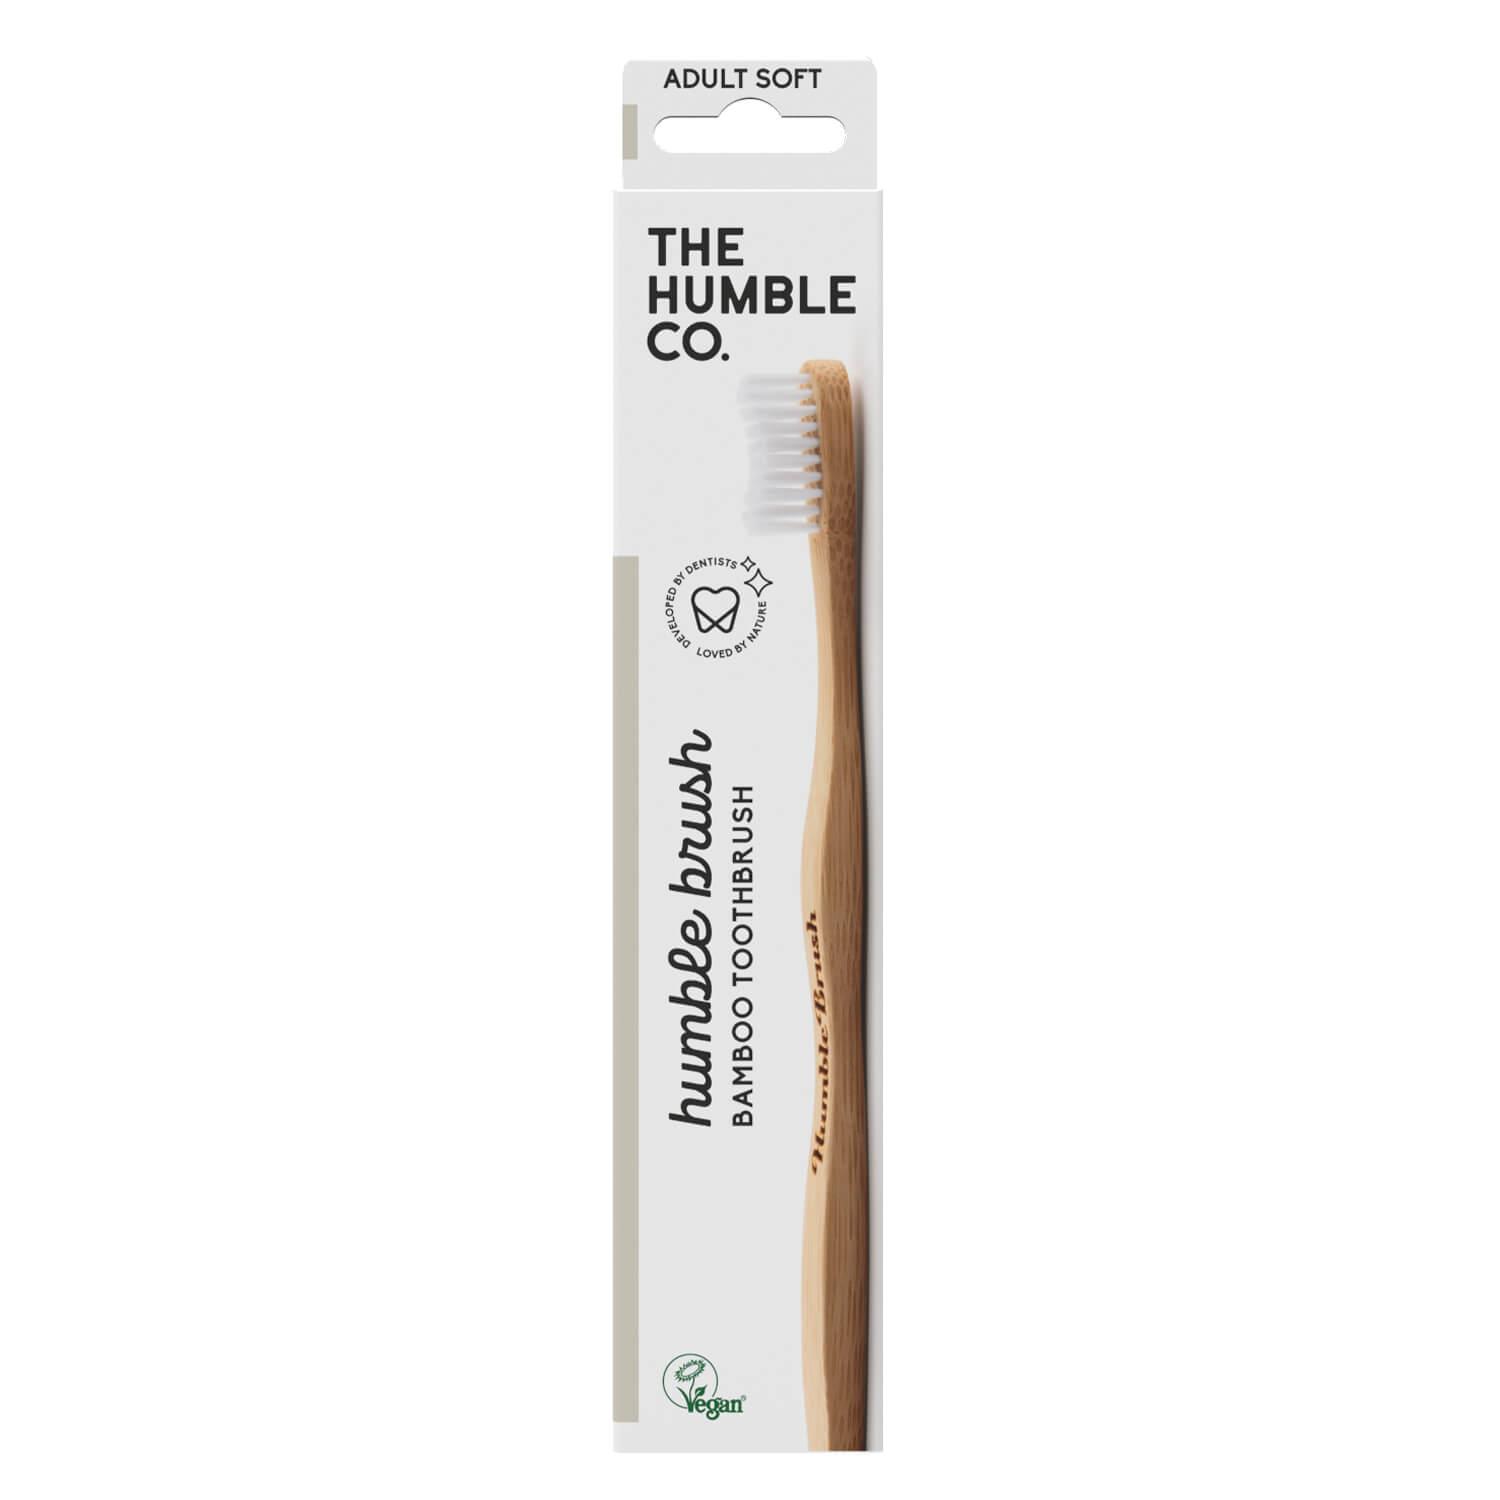 THE HUMBLE CO. - Humble Brosse à Dents Adultes Blanc